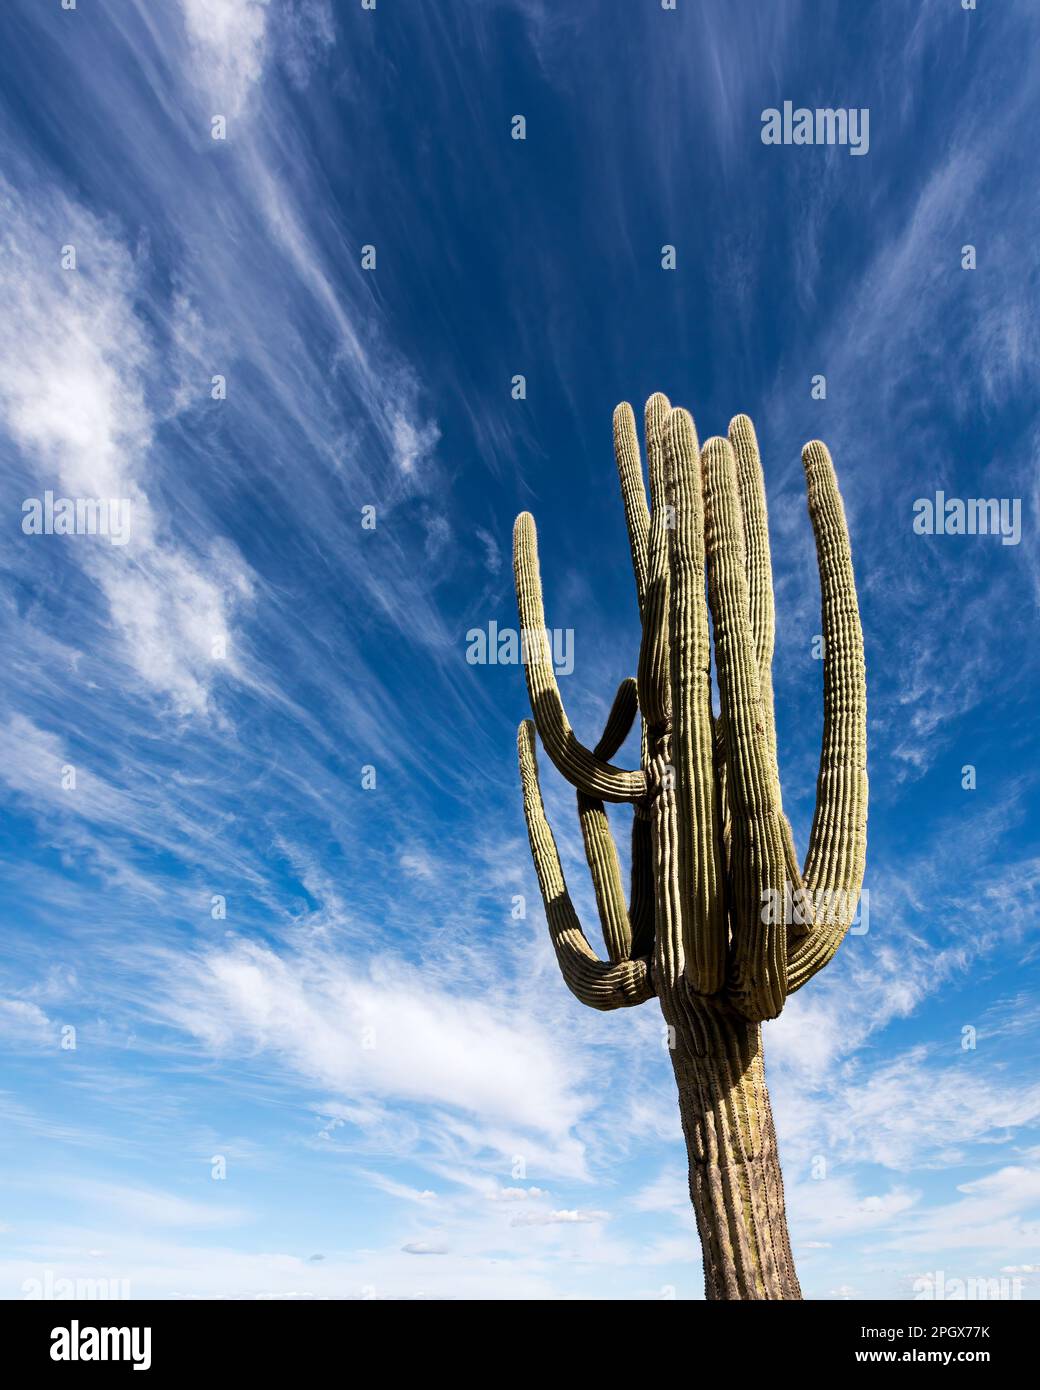 Riesen-Saguaro (Carnegiea gigantea), isoliert vom Himmel, McDowell Sonoran Preserve, Scottsdale, Arizona, USA. Stockfoto